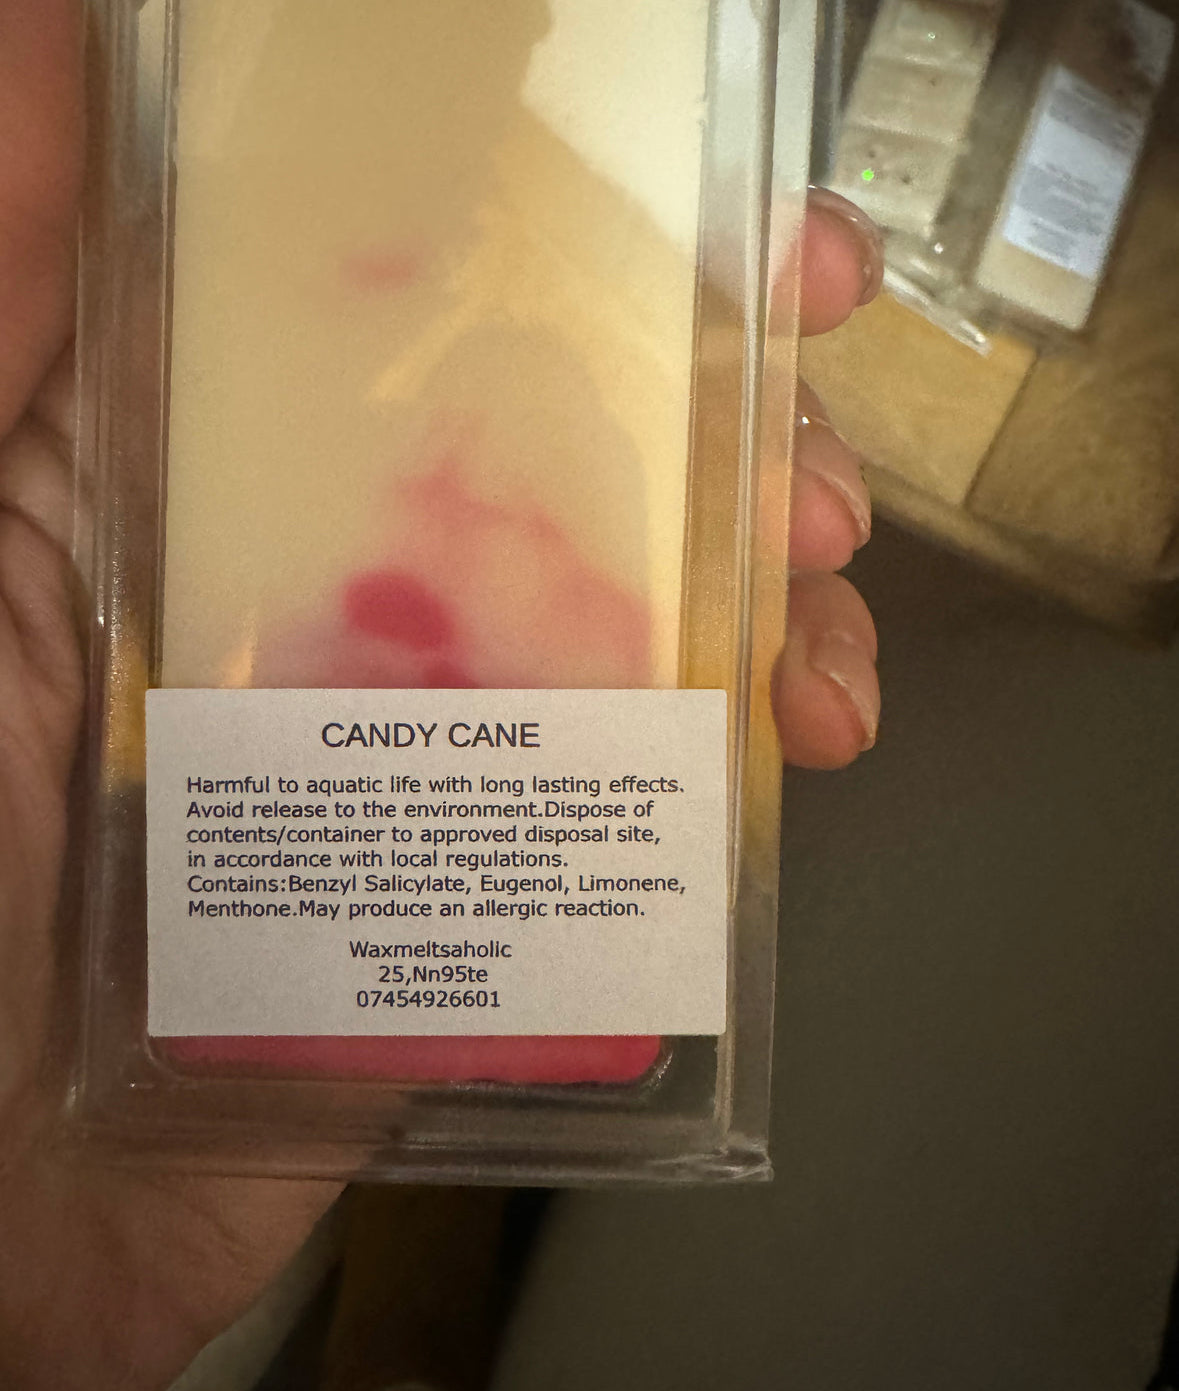 Candy Cane shapes